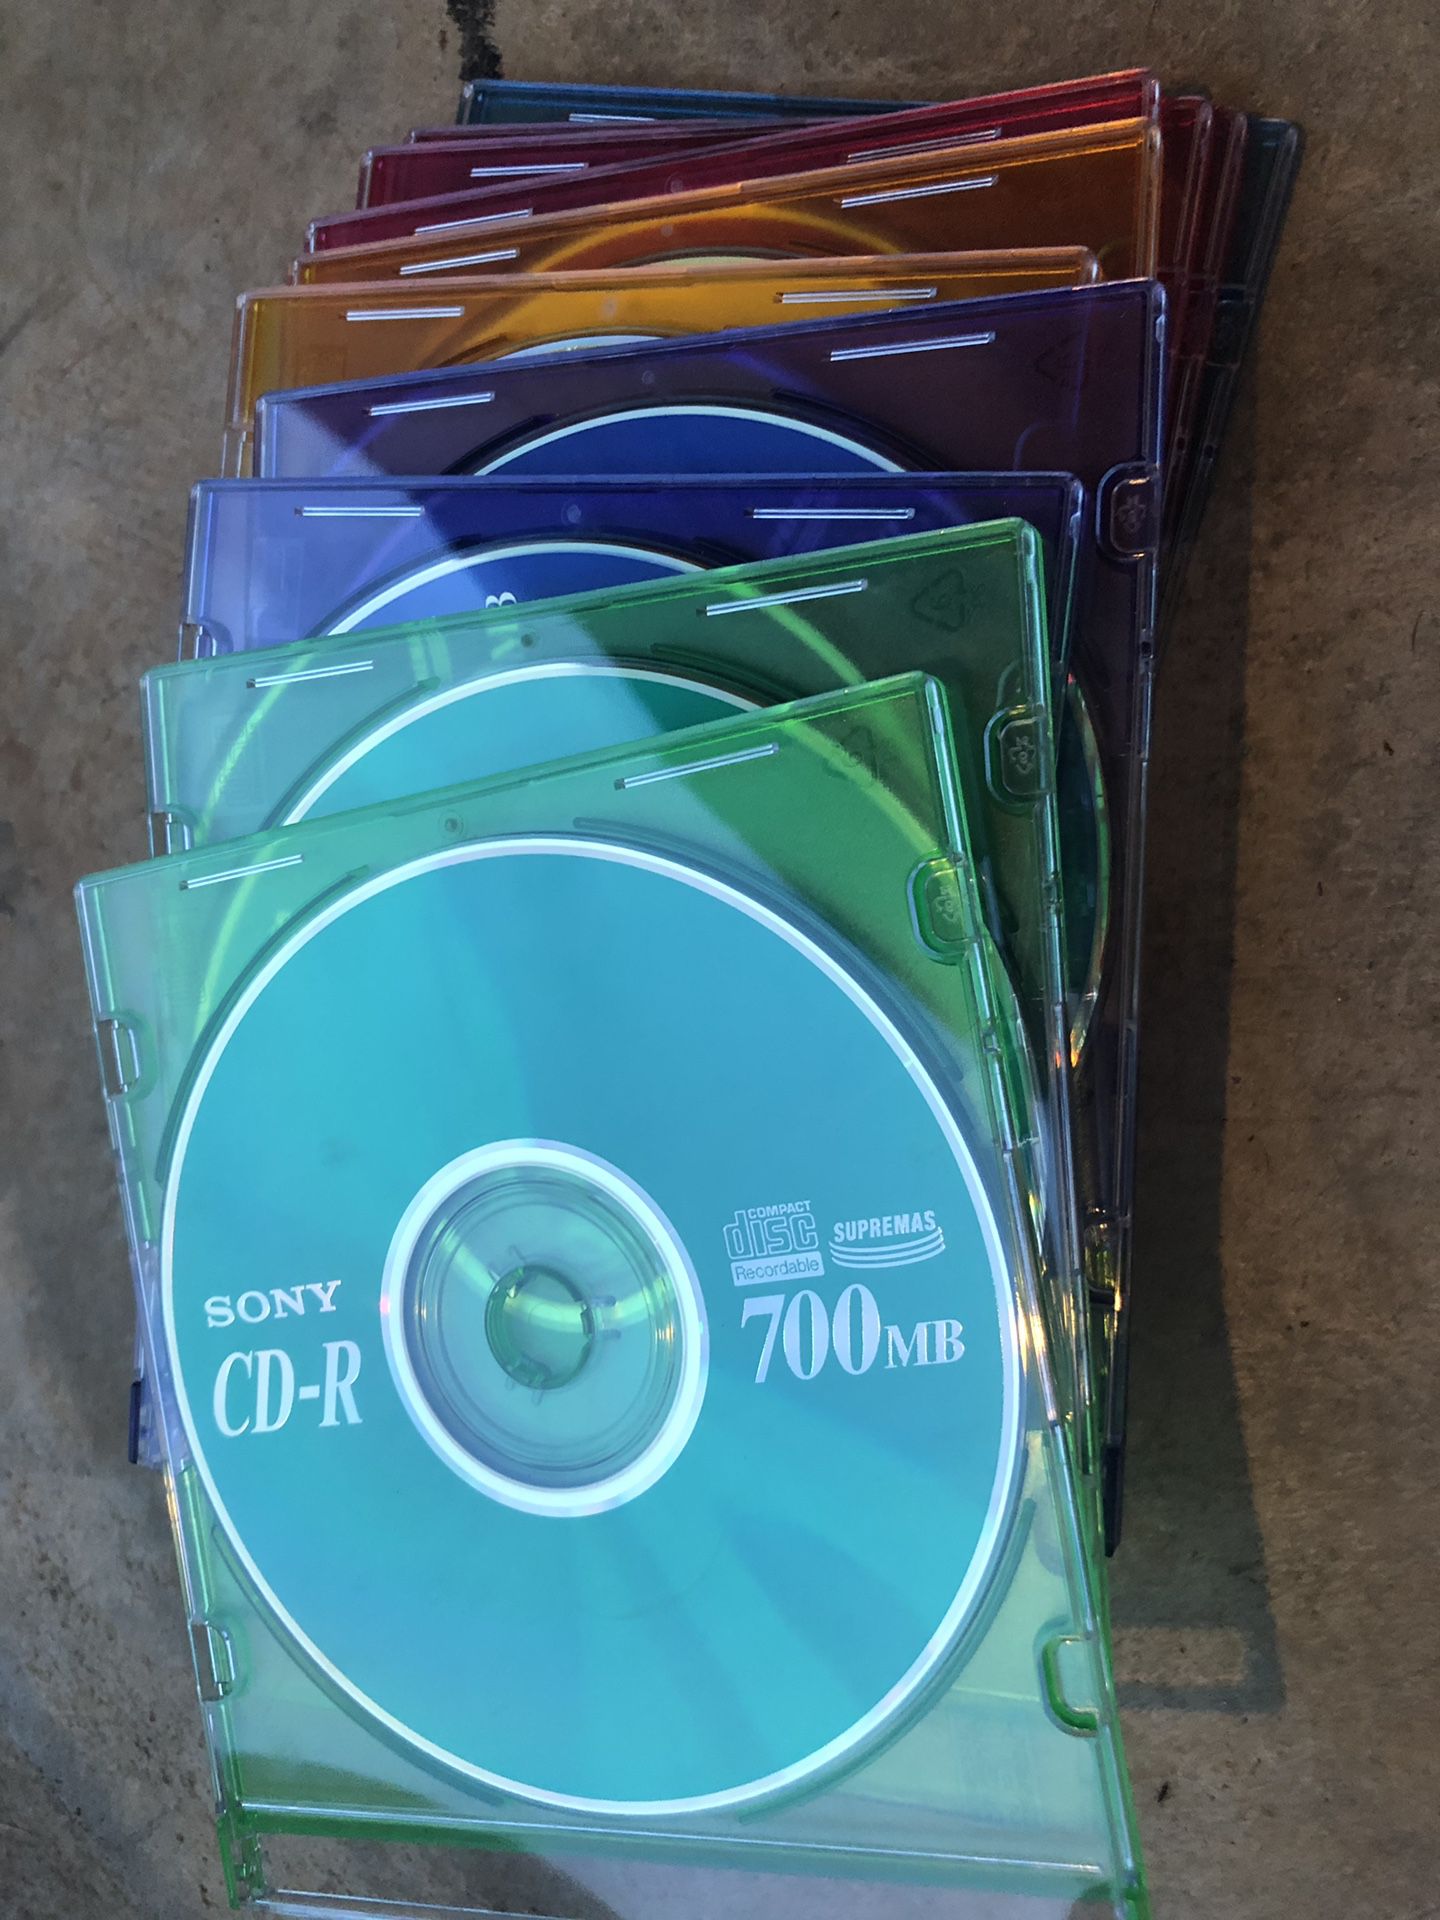 writable cds